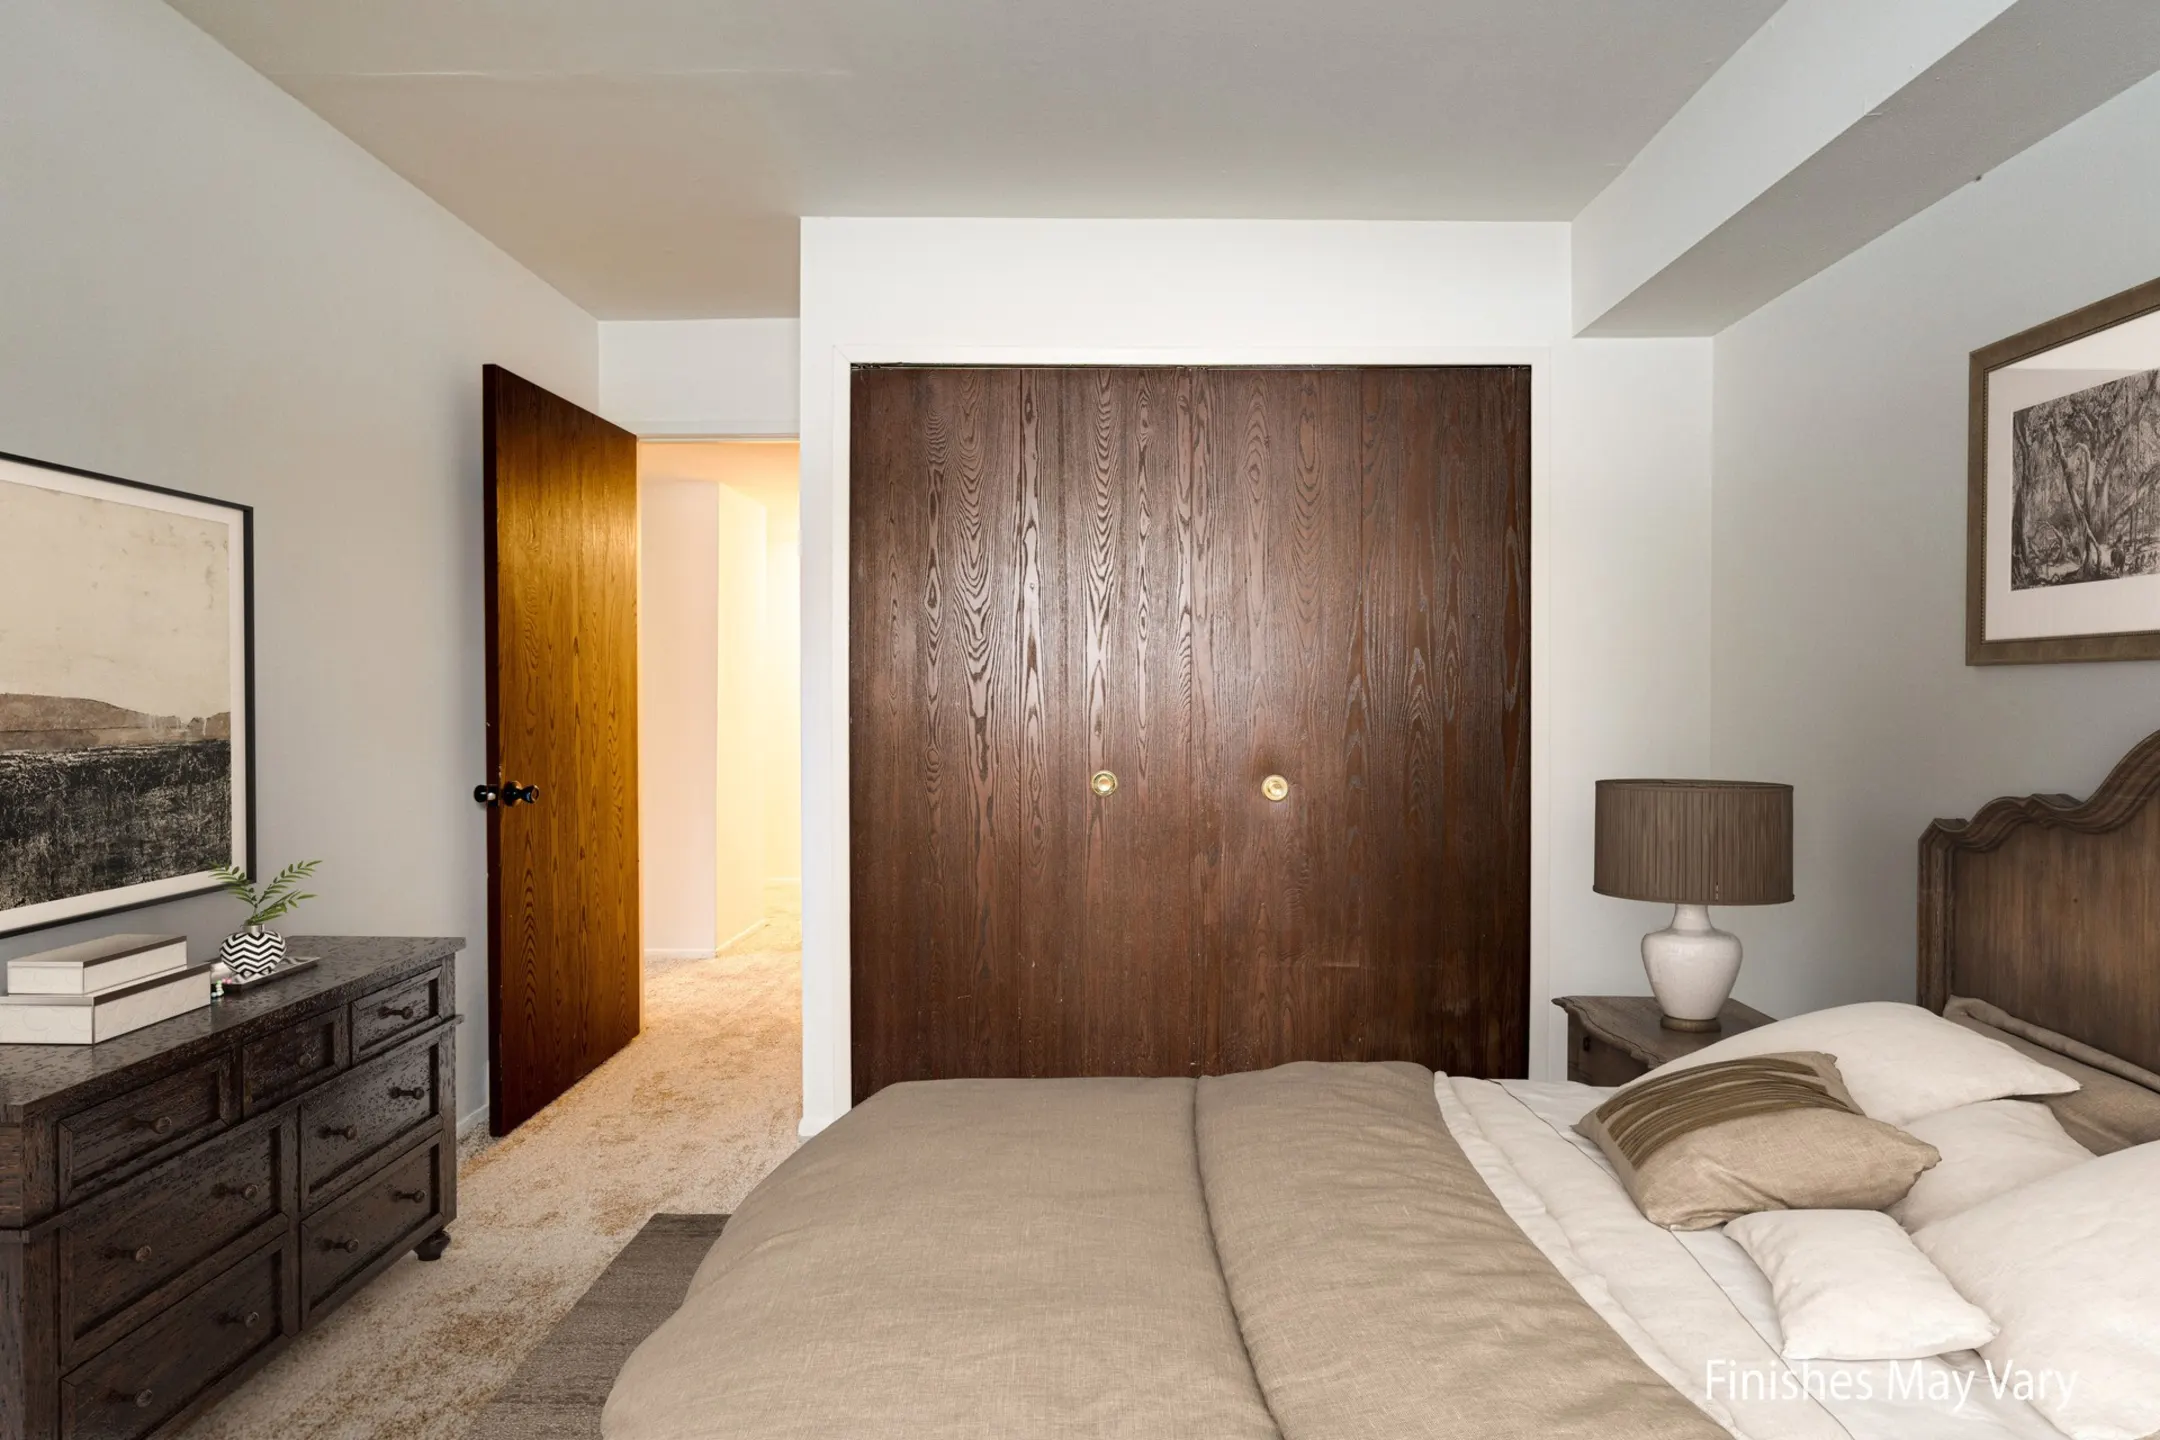 Bedroom - Laurel Woods Apartments - Greenville, SC